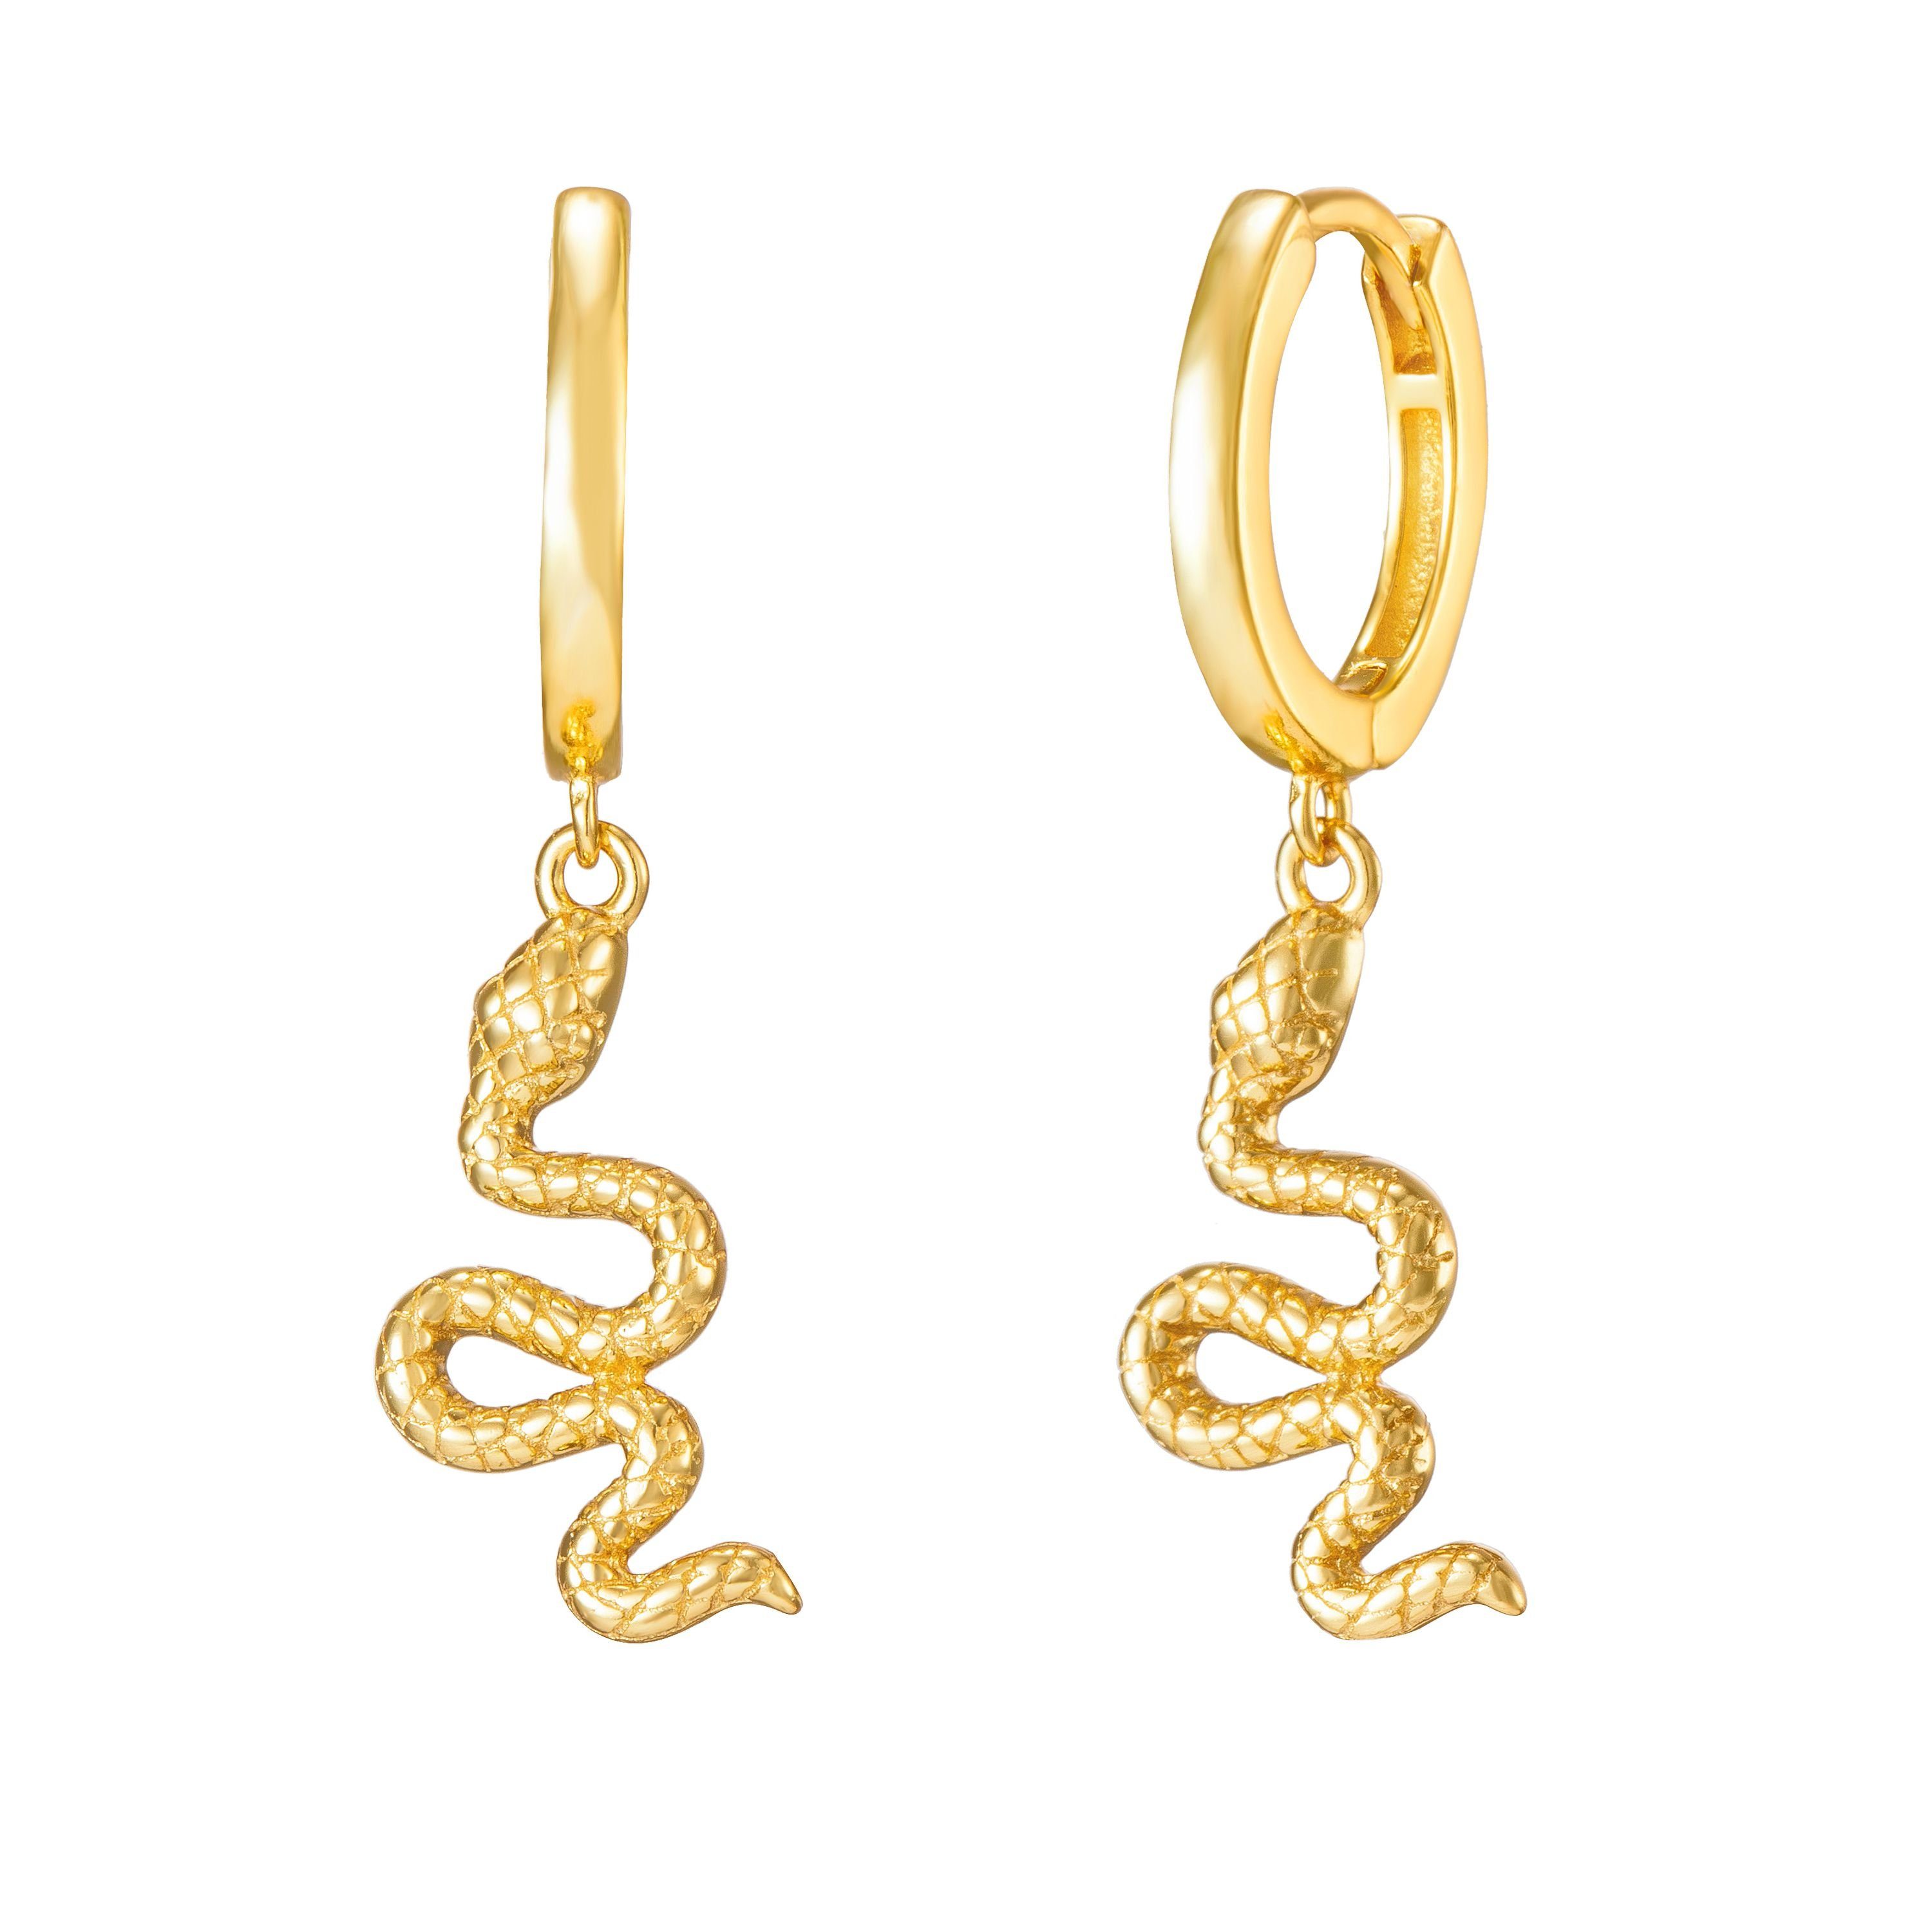 Brandlinger Paar Ohrhänger Ohrringe vergoldet Schlangen 925 Culebra, Silber